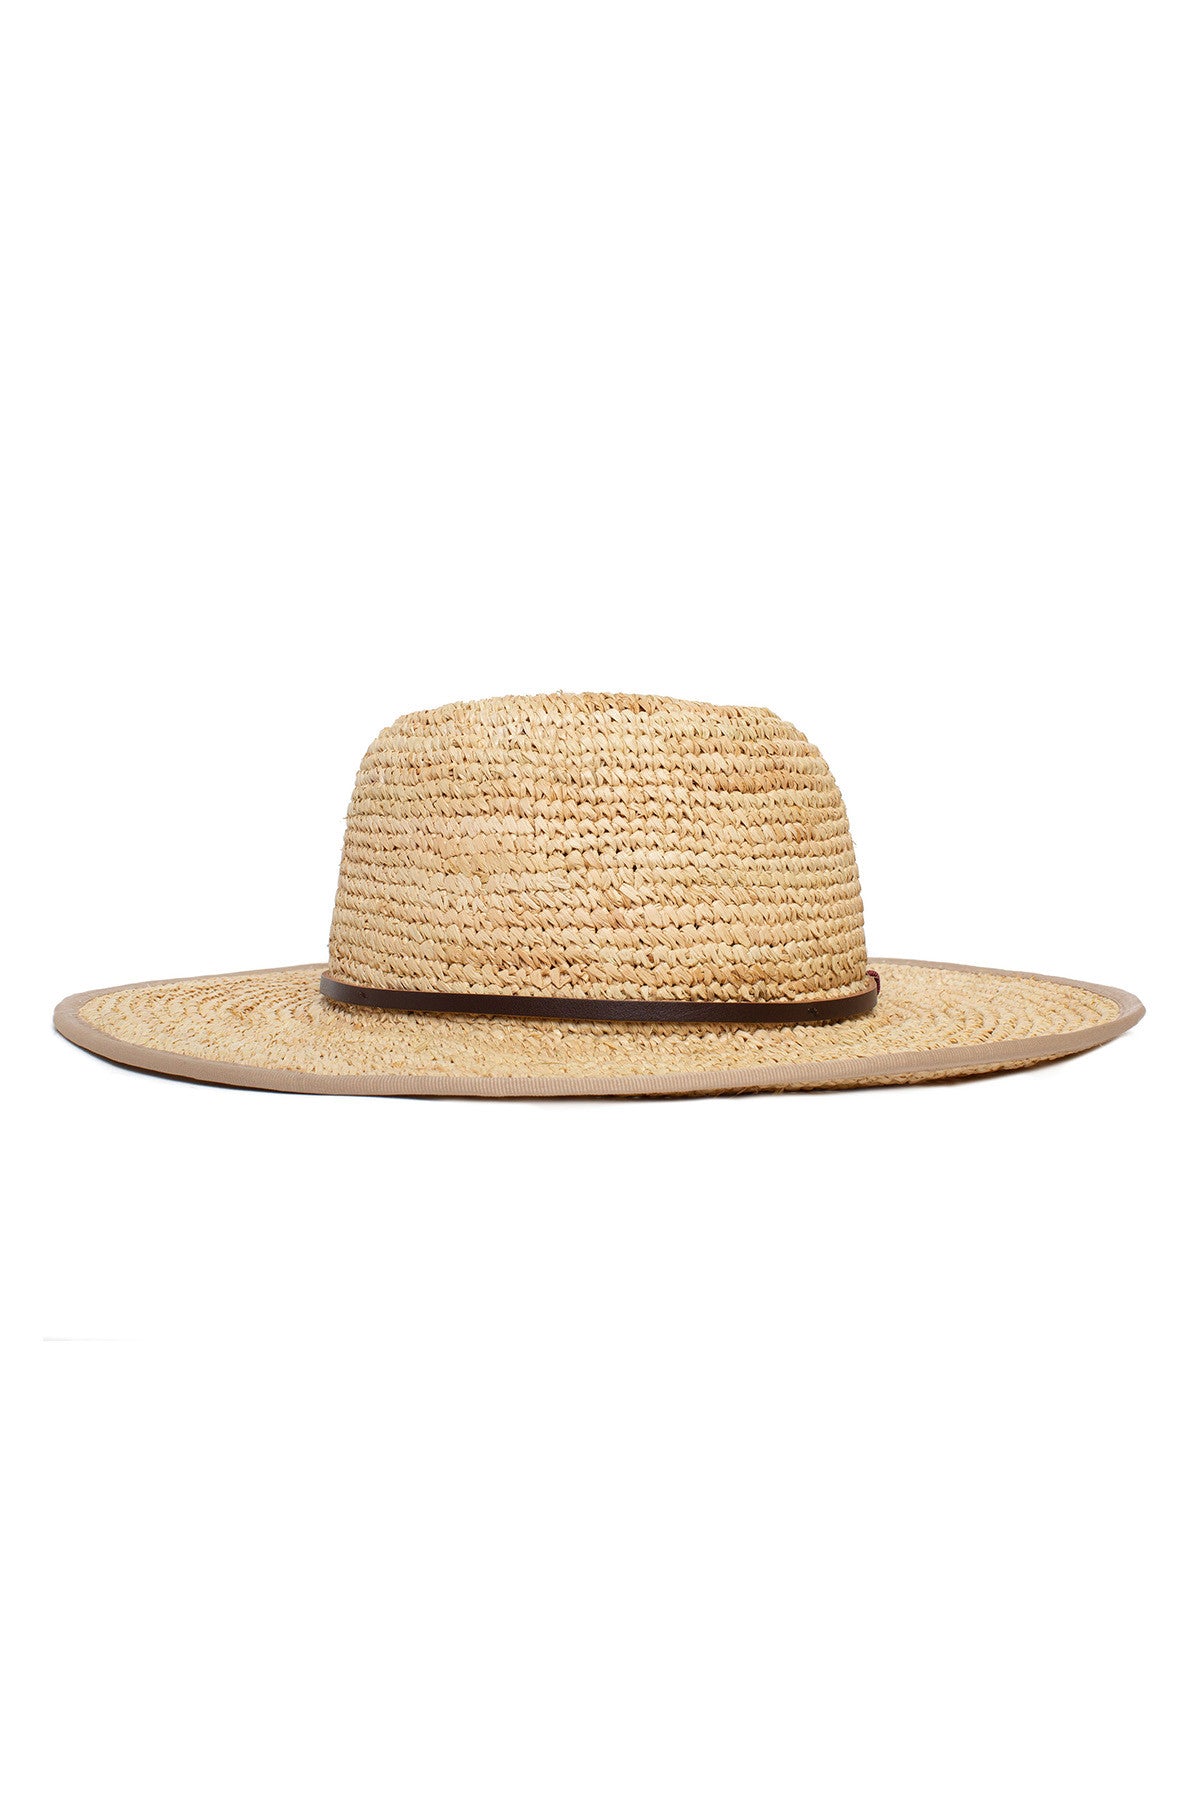 Goorin Bros Desert Sun Hat Natural